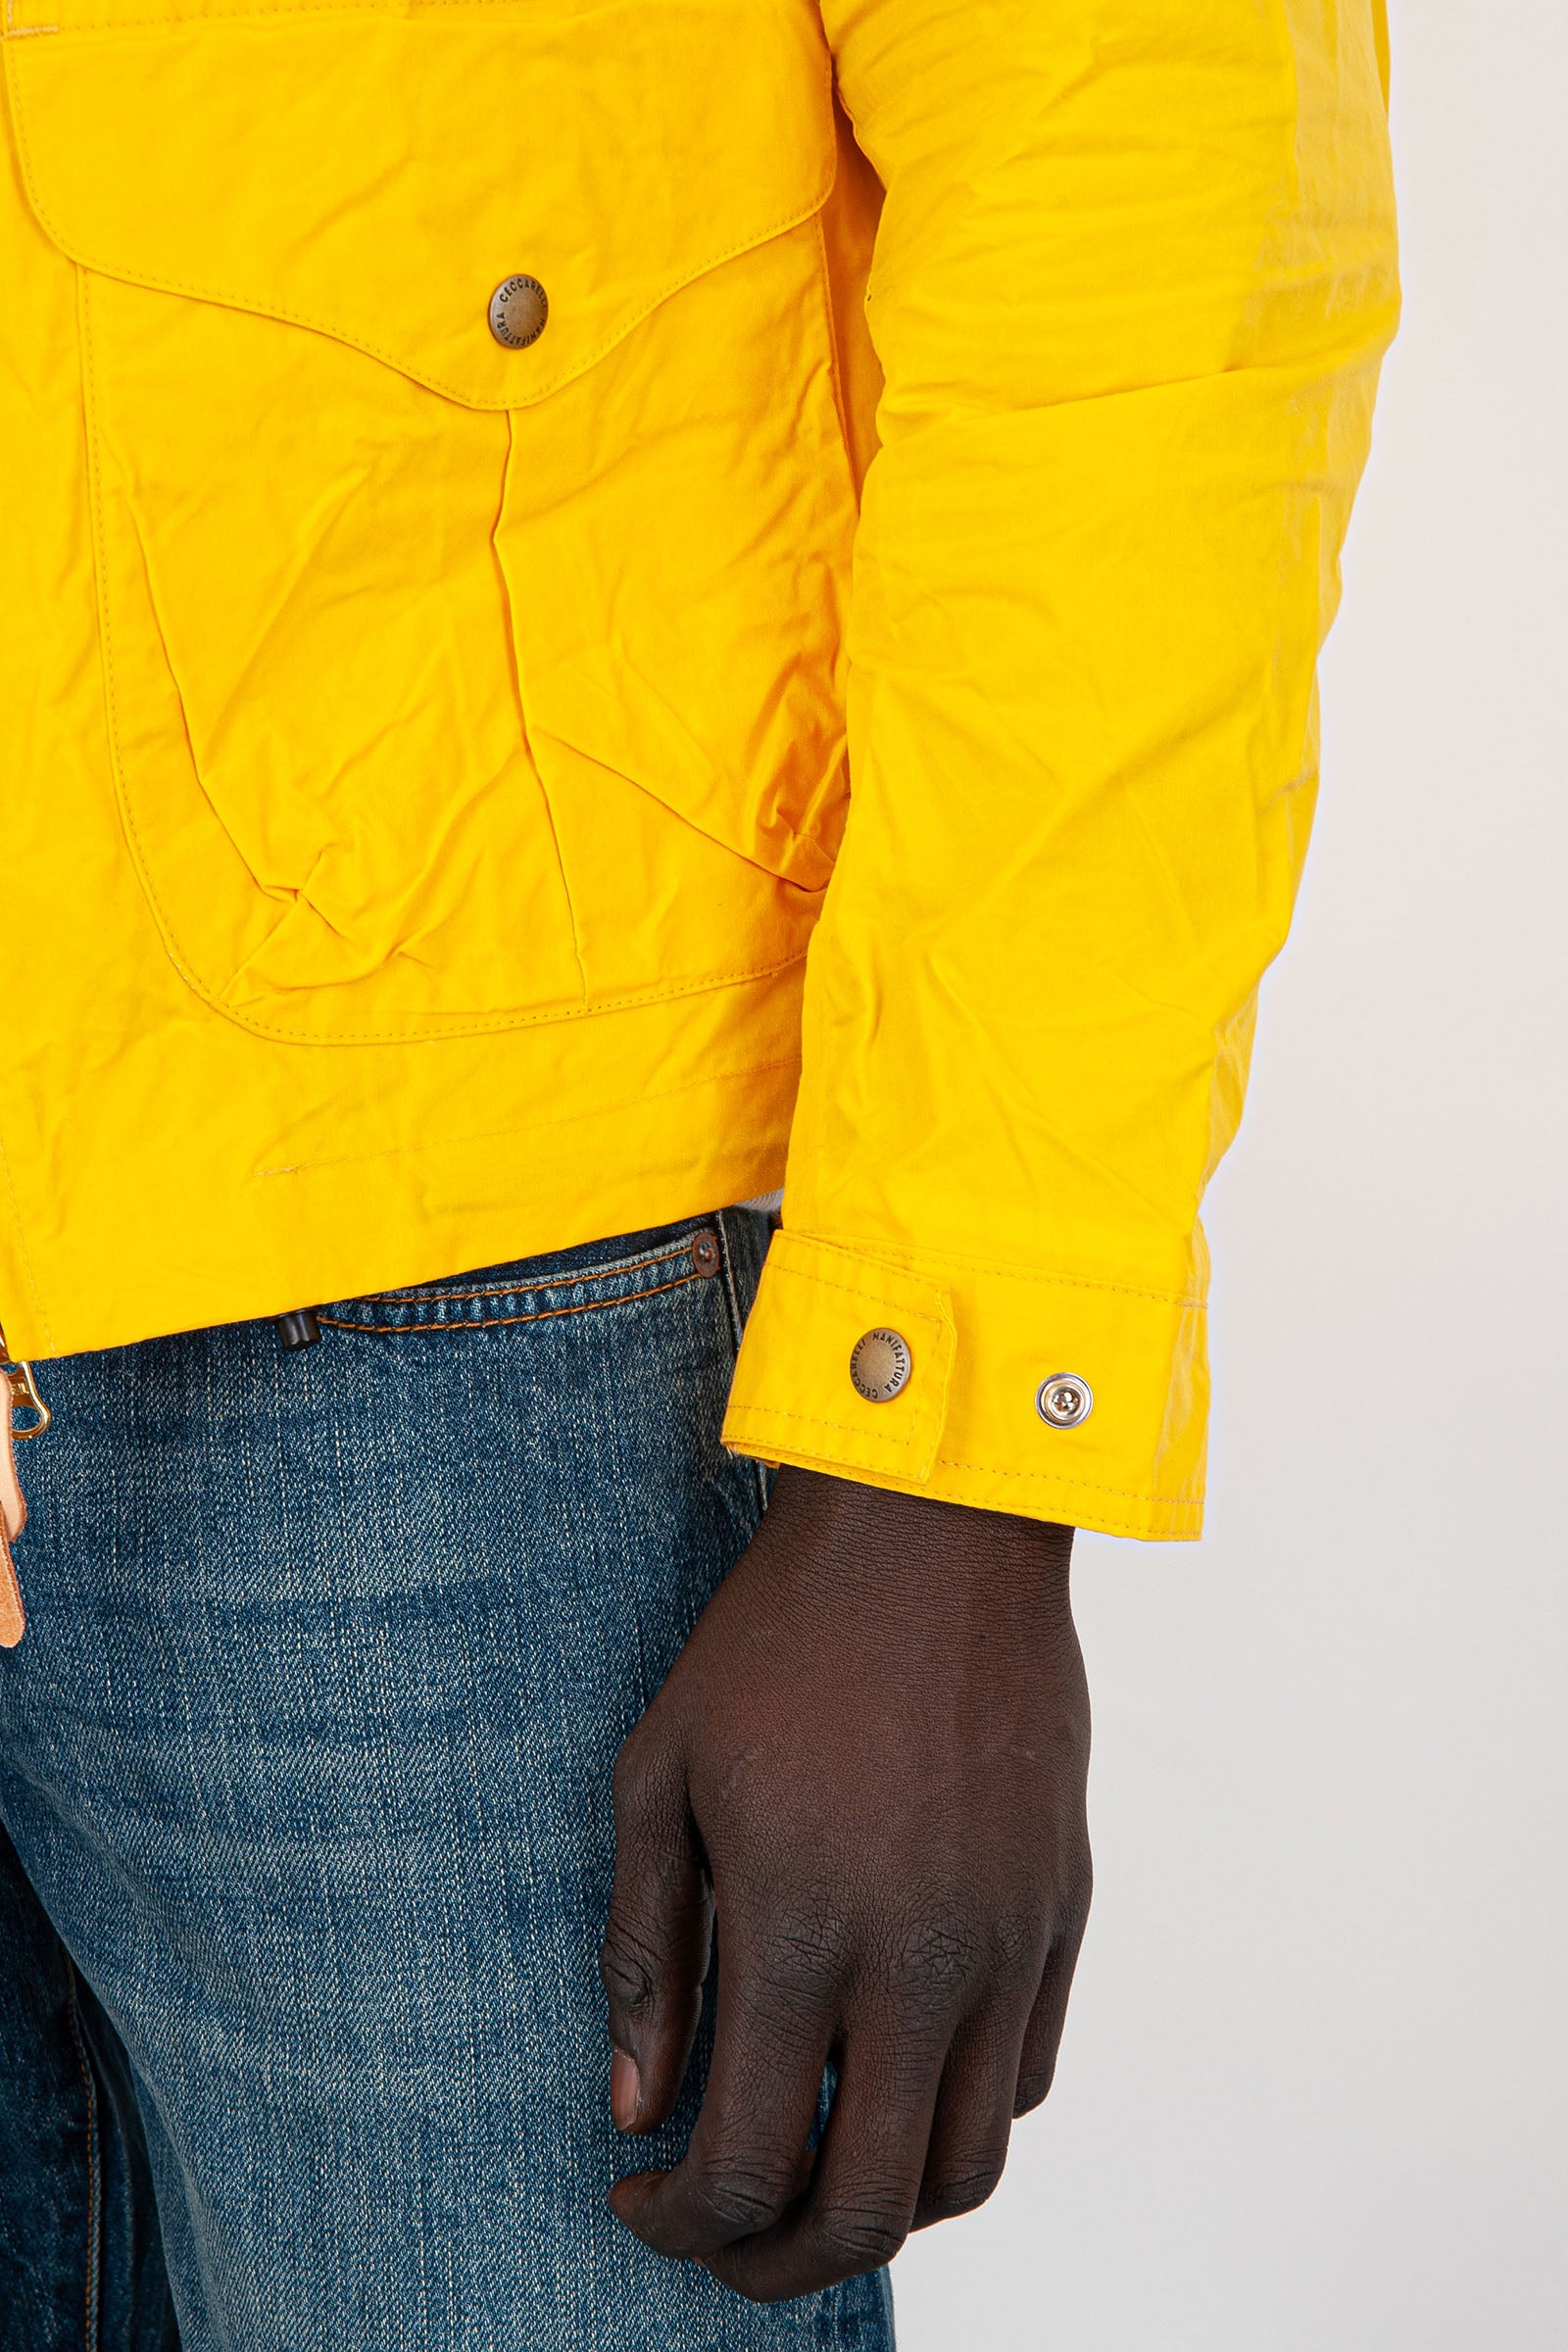 Manifattura Ceccarelli Blazer Coat With Hood Yellow Cotton - 5